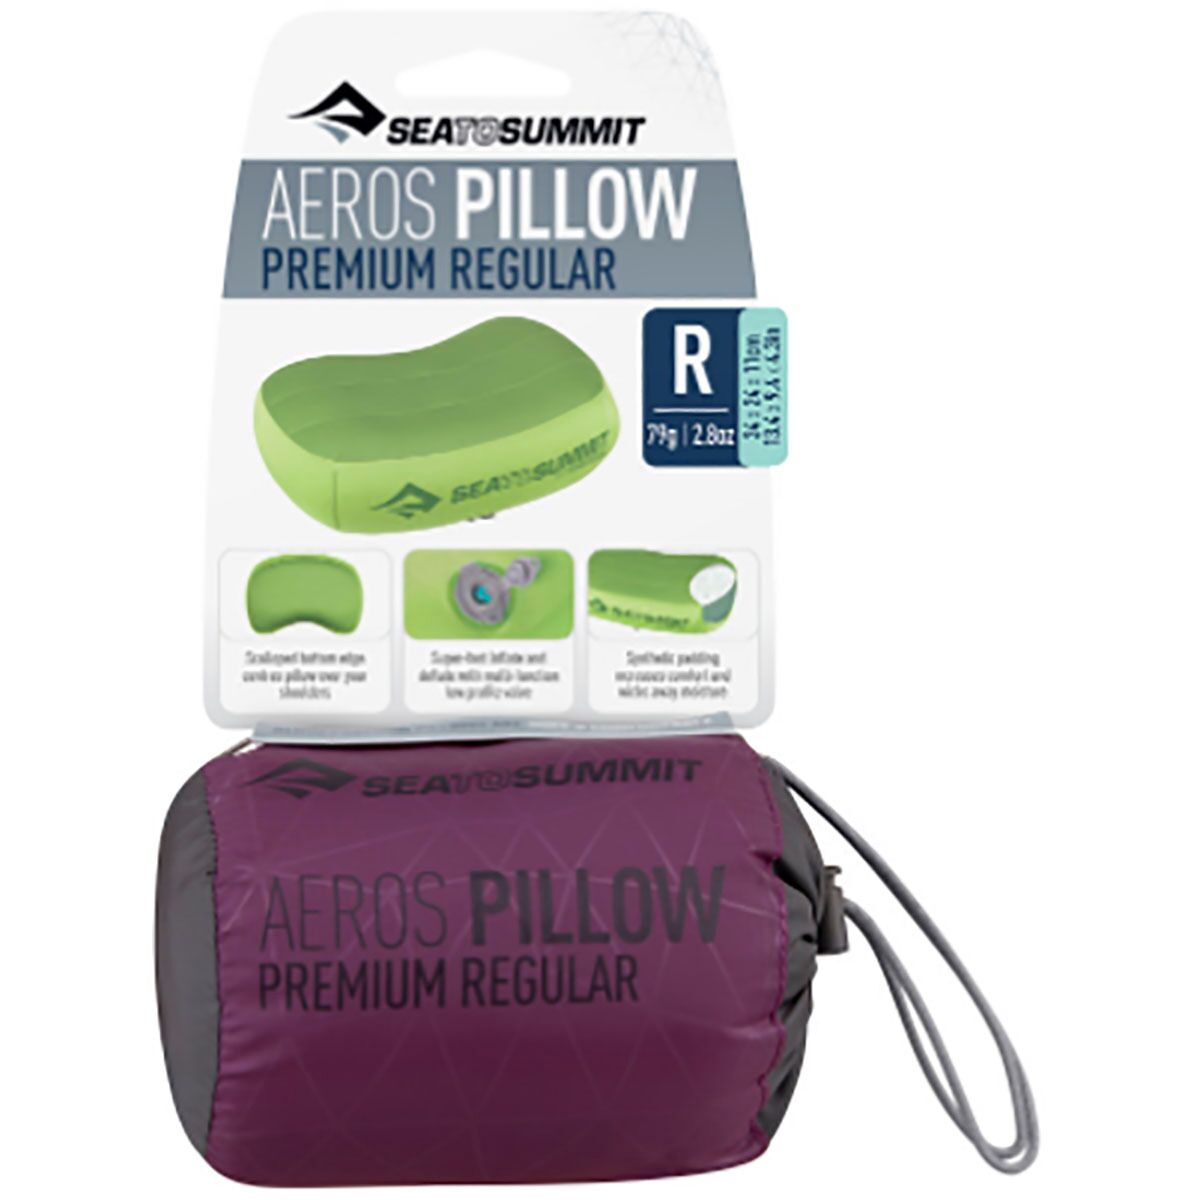 Sea to Summit Aeros Pillow Premium Regular Green Free Int'l Standard Shipping 